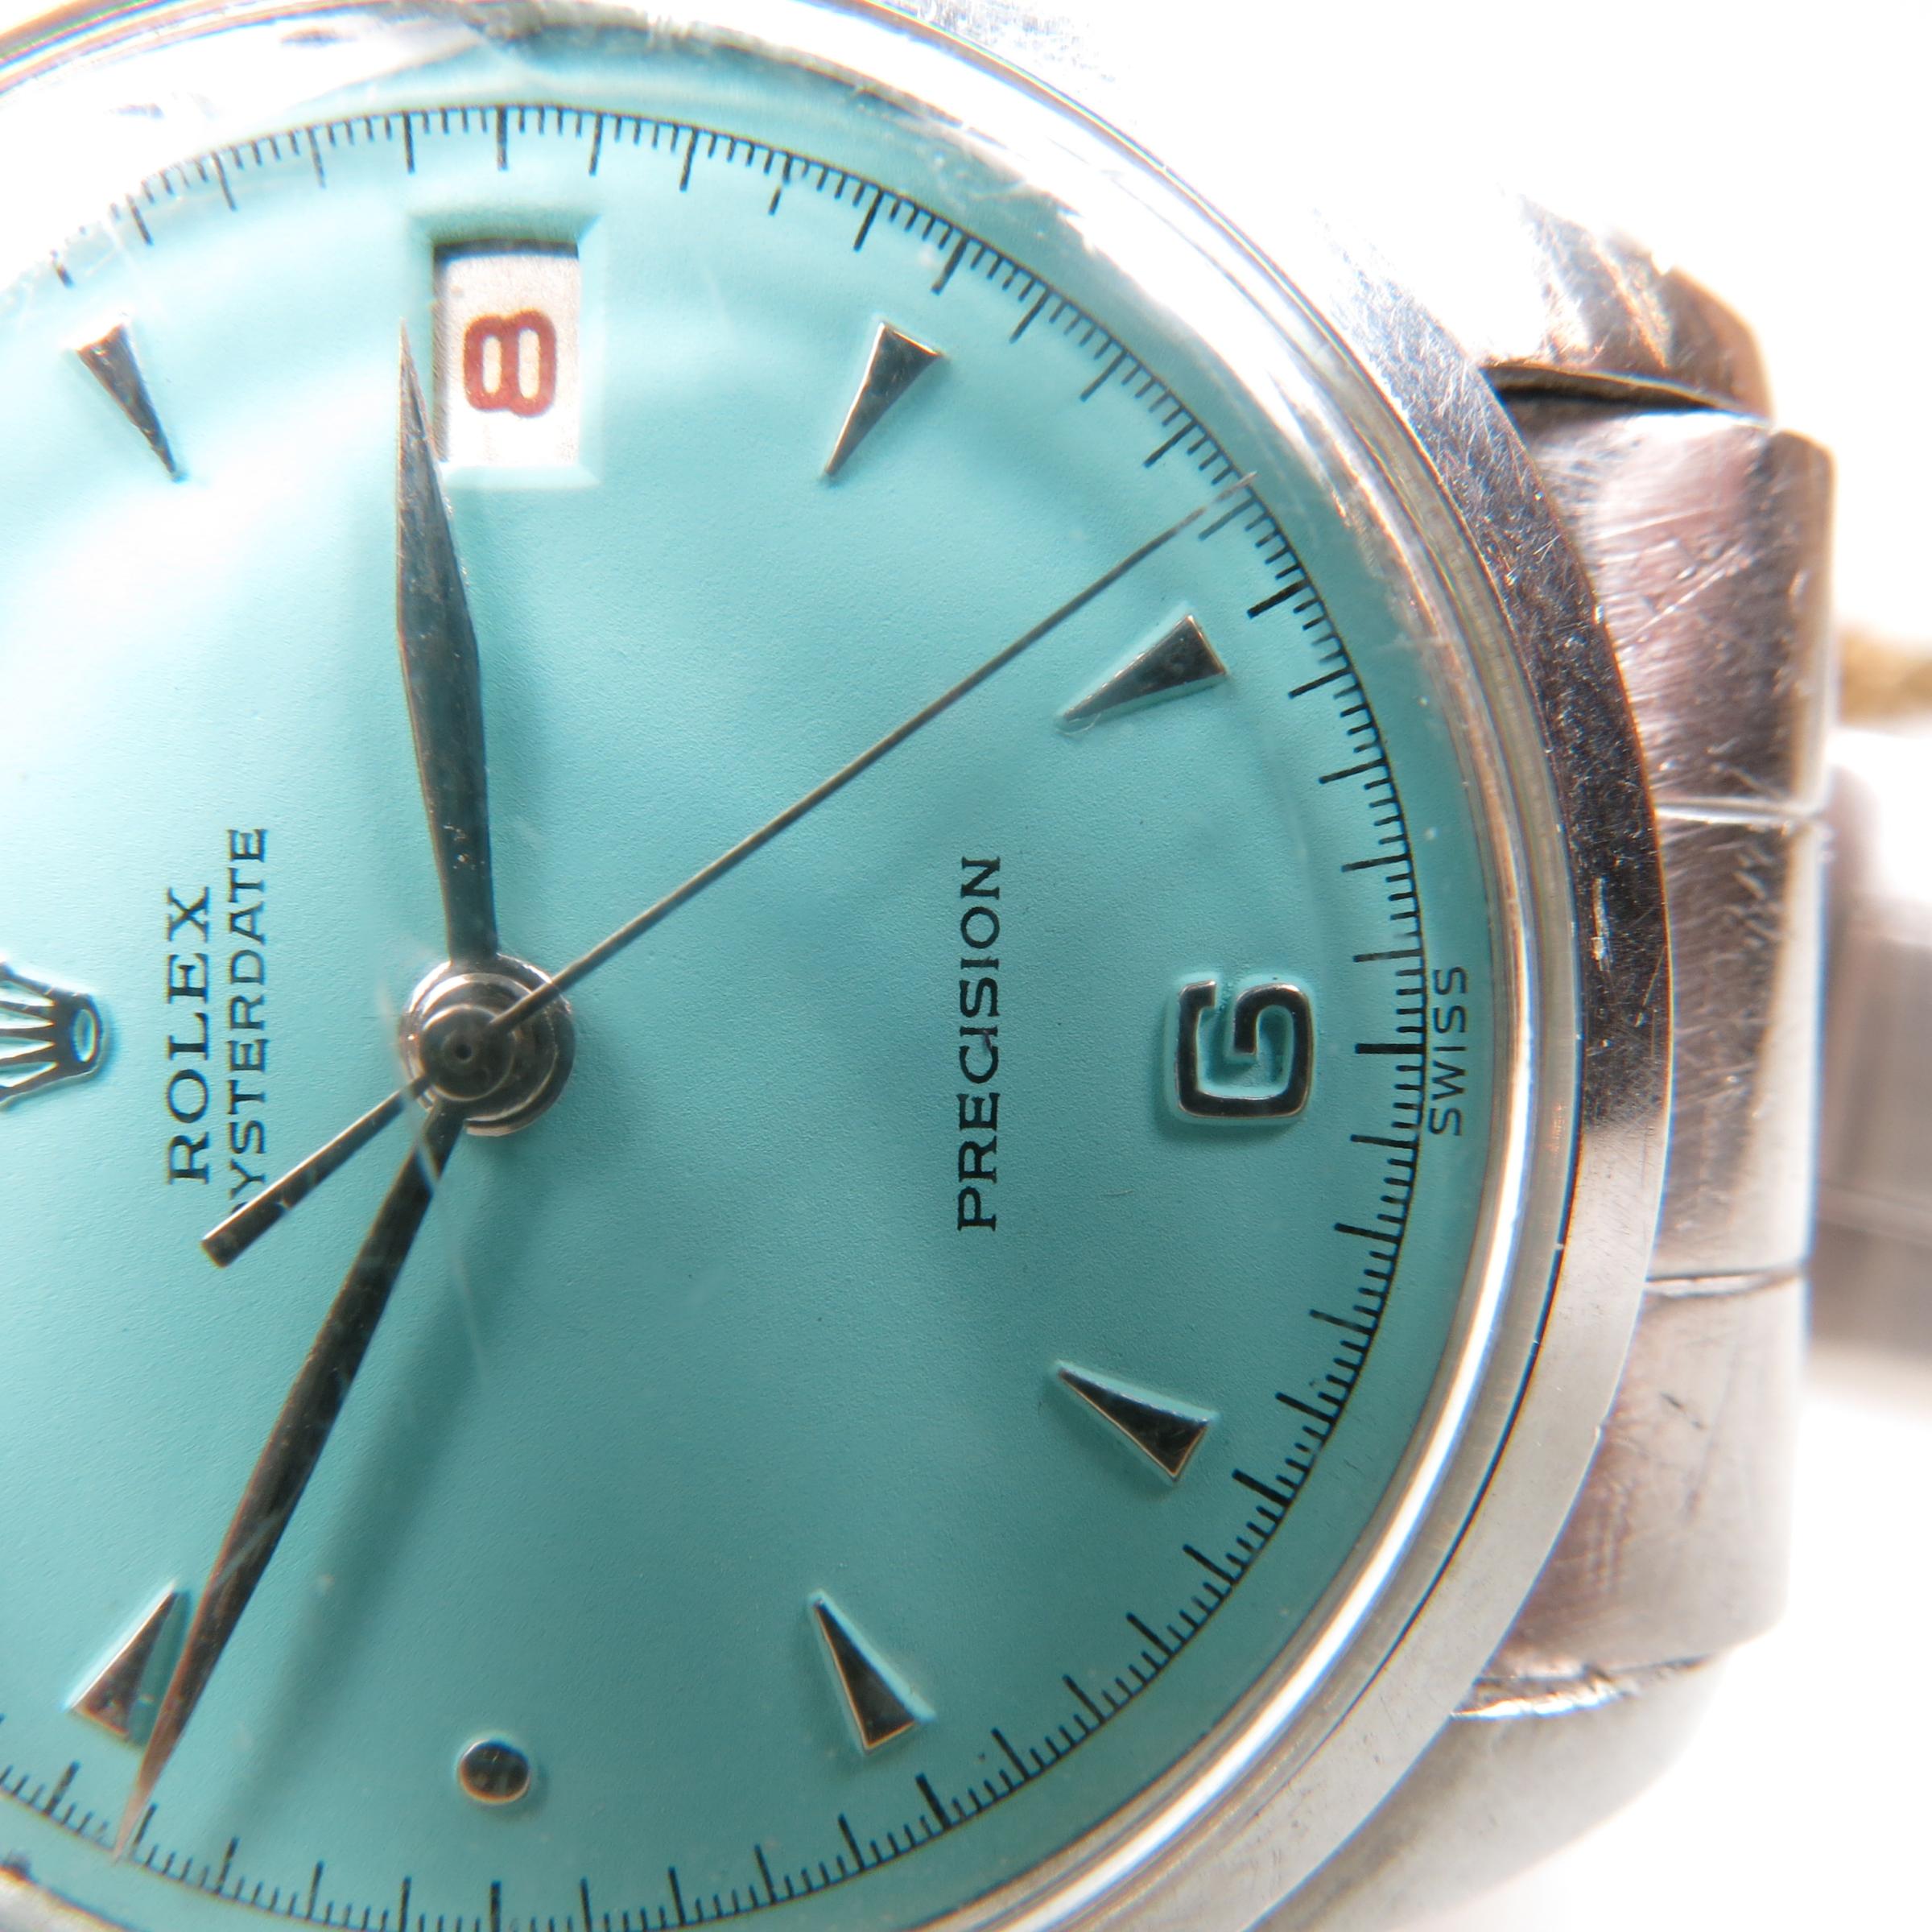 Rolex OysterDate 'Precision' Wristwatch